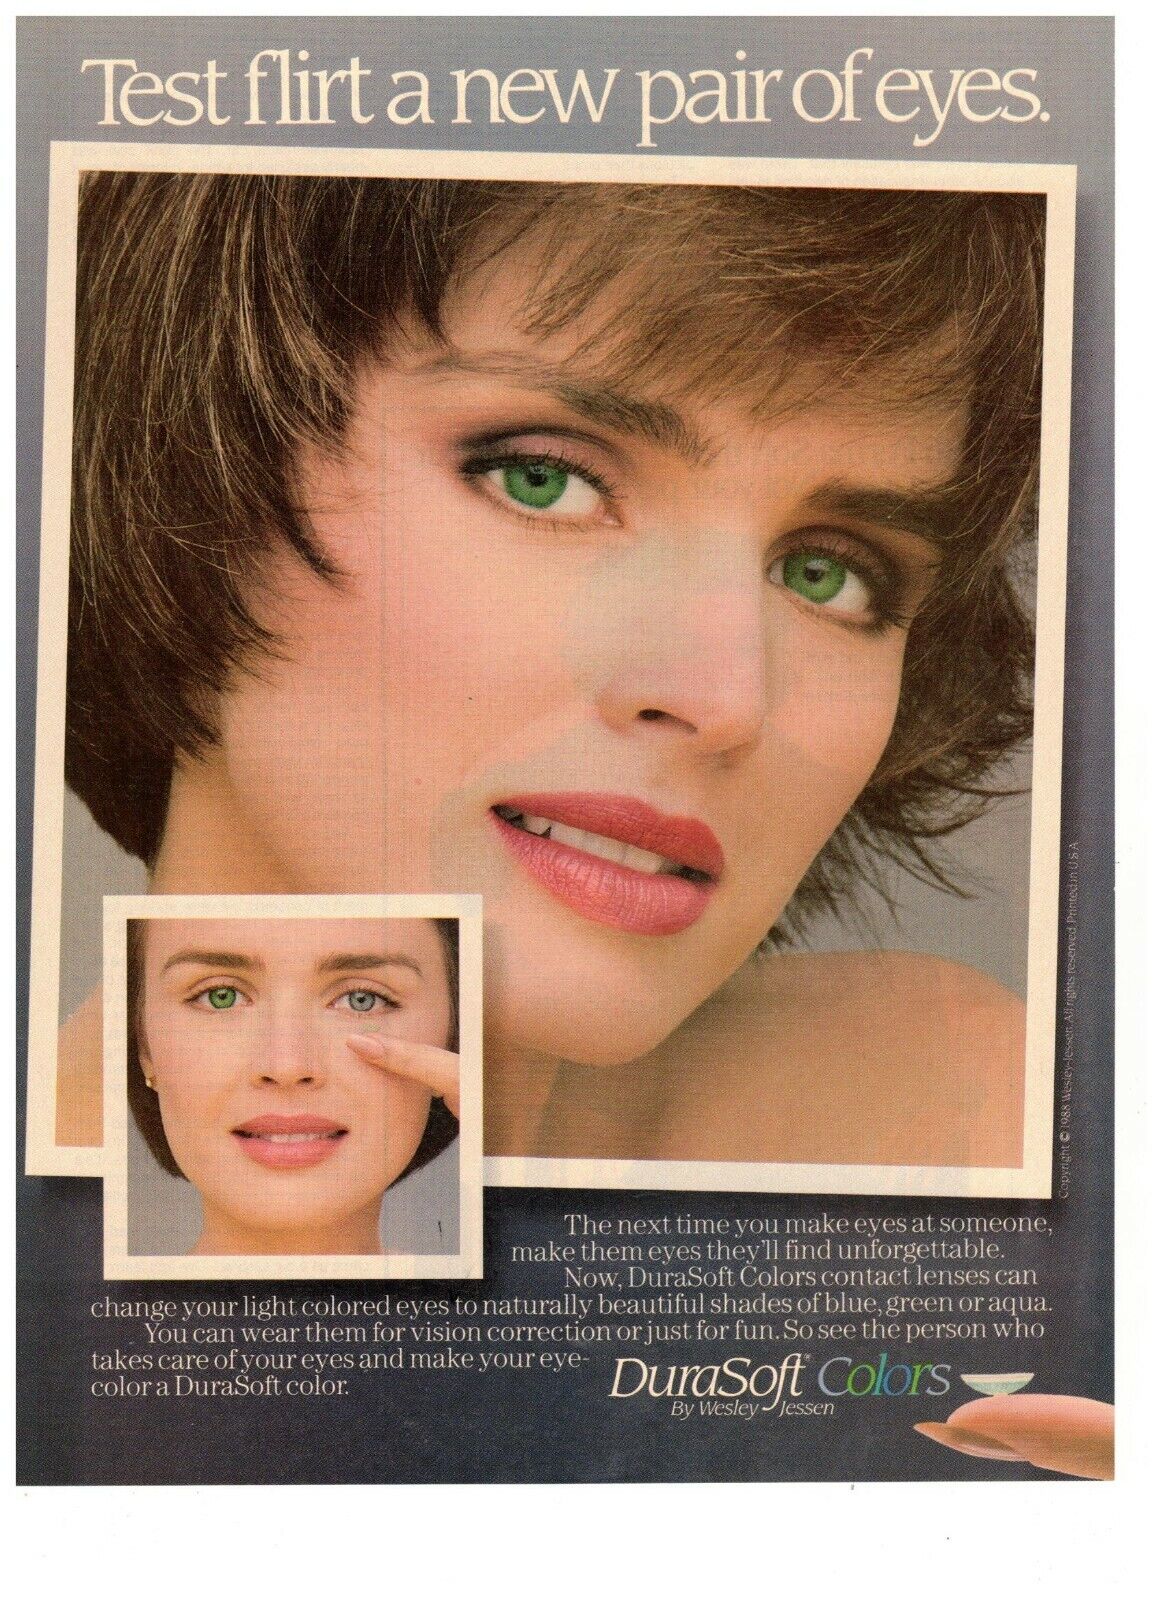 DuraSoft Colors Test Flirt a New Pair of Eyes Vintage 1984 Print Ad